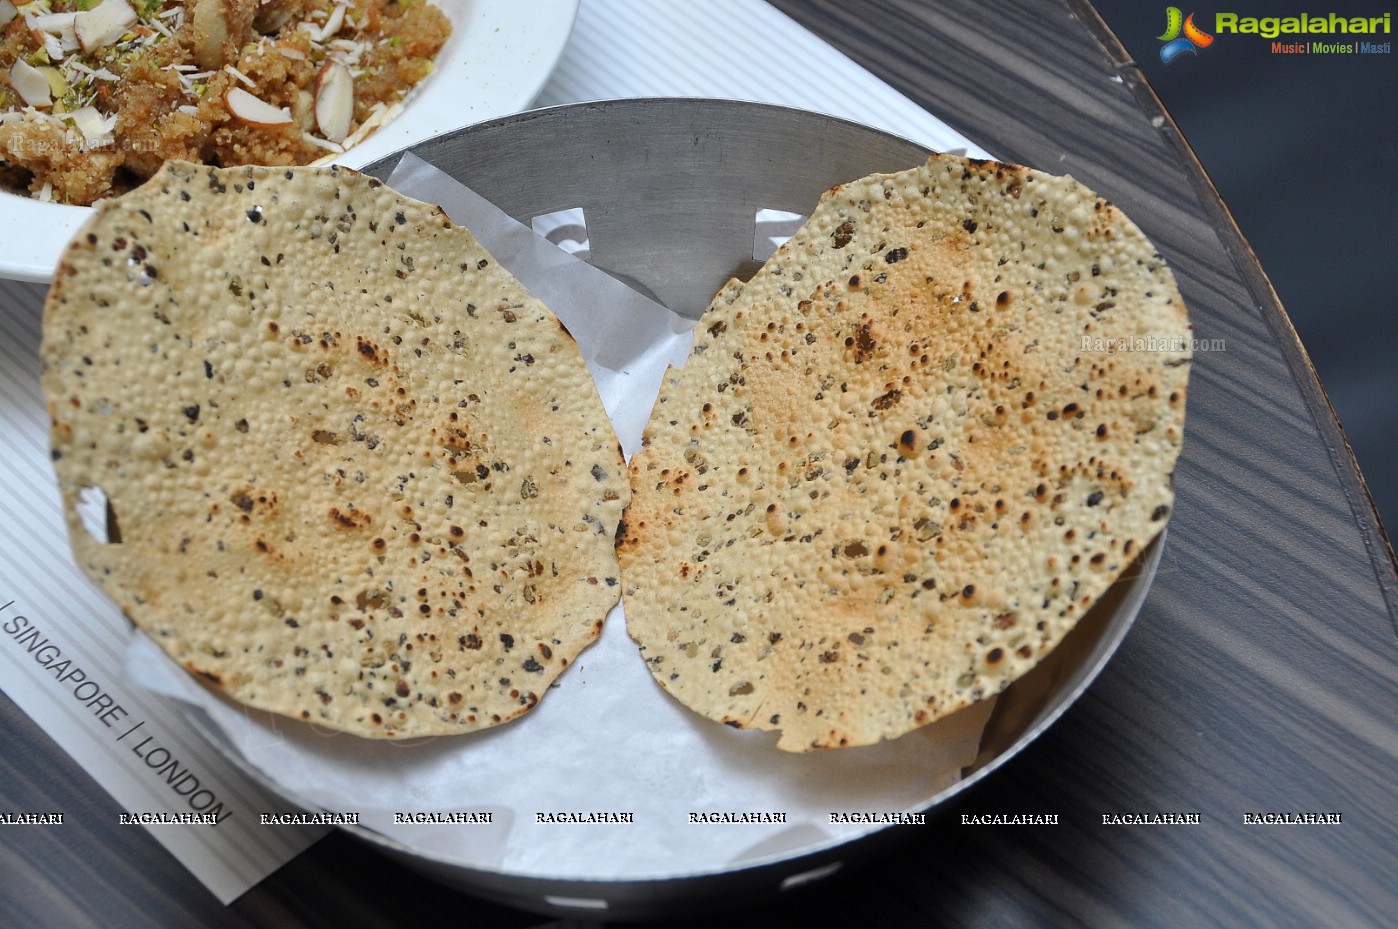 Gujarati and Rajasthani Food Fest at Kailash Parbat, Hyderabad